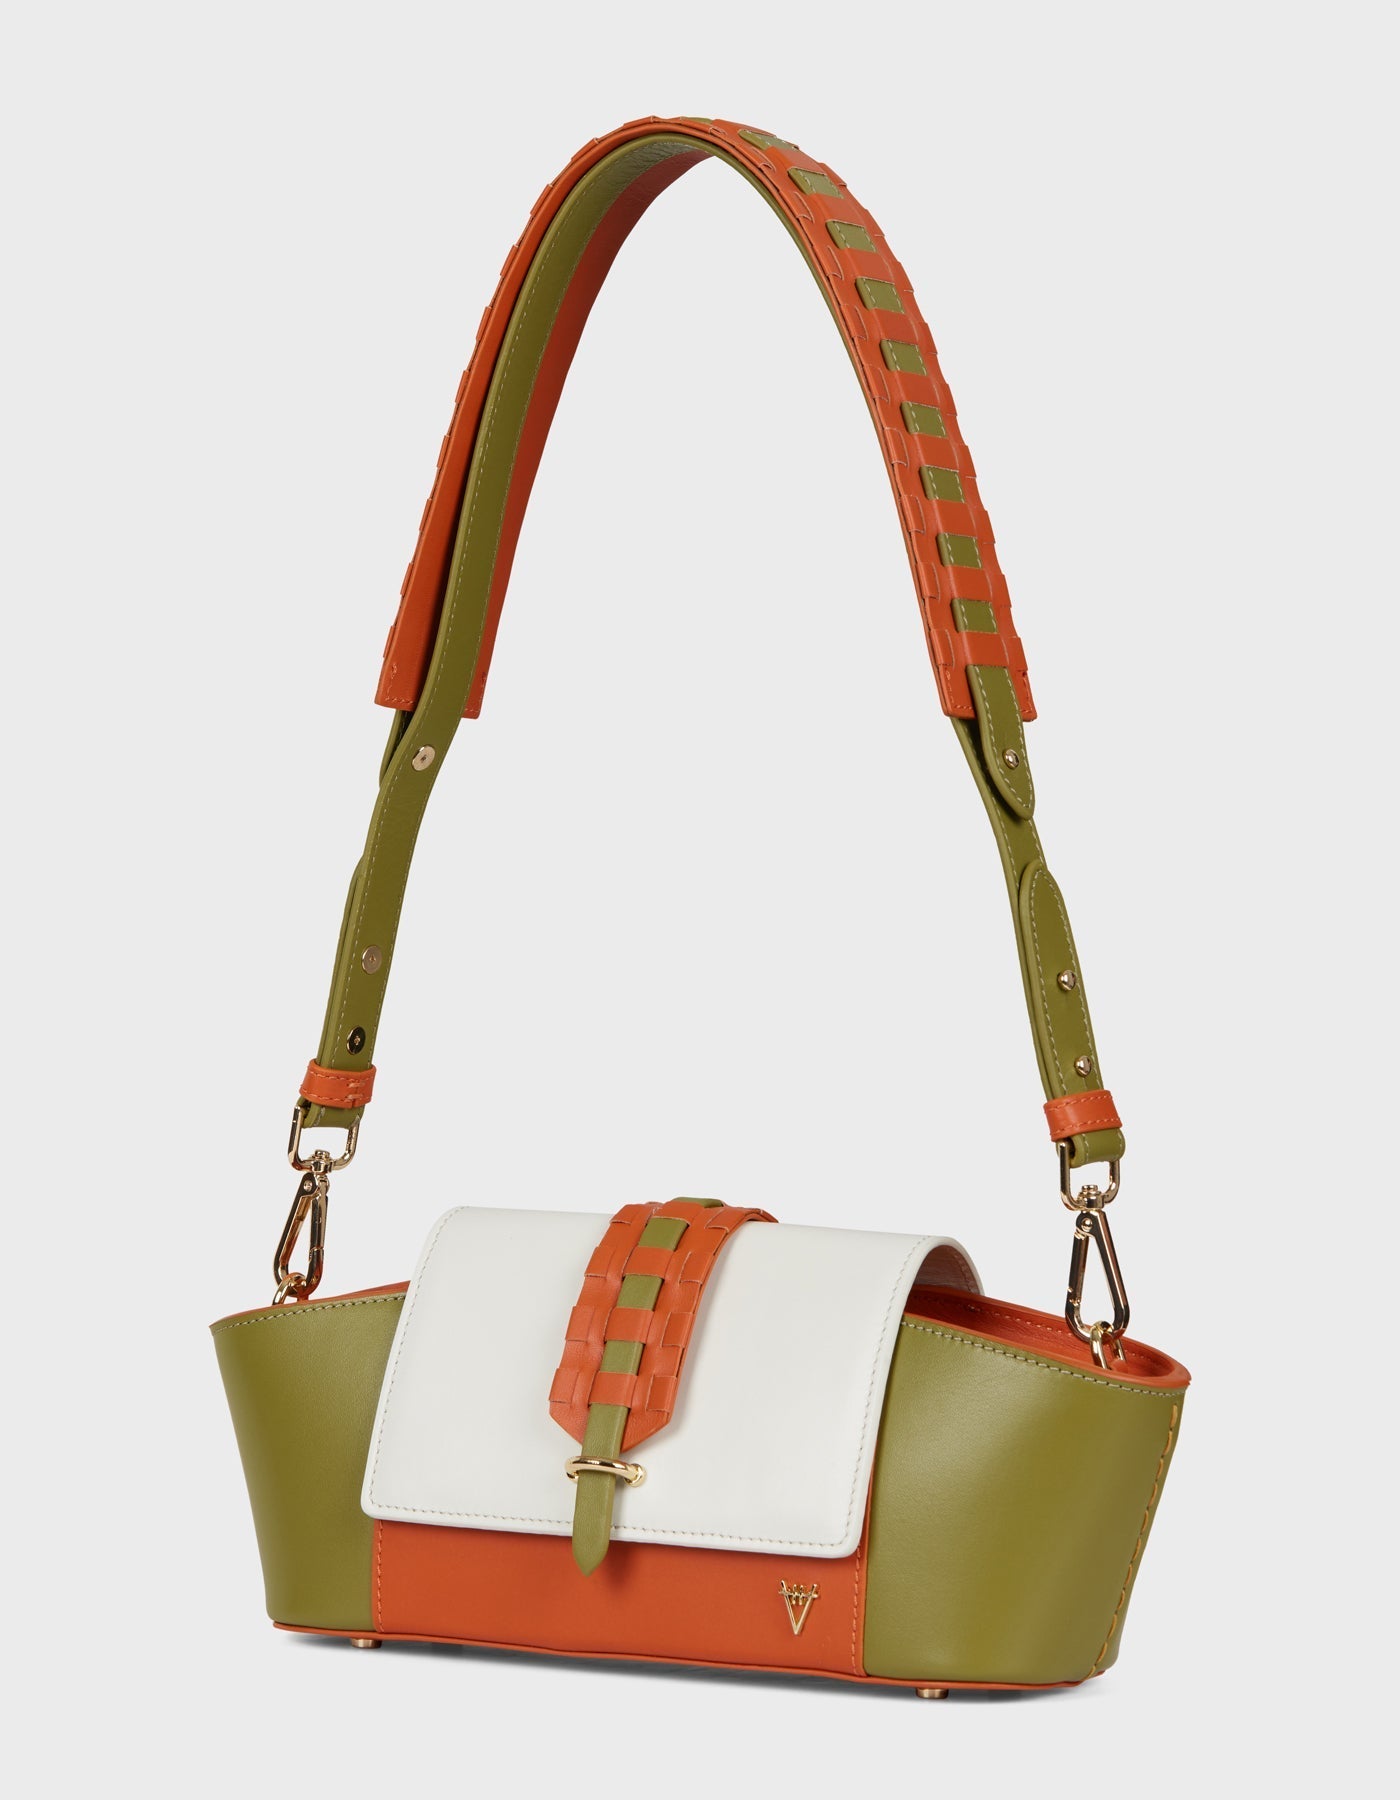 HiVa Atelier | Navis Shoulder Bag Burnt Orange & Olive & Bone | Beautiful and Versatile